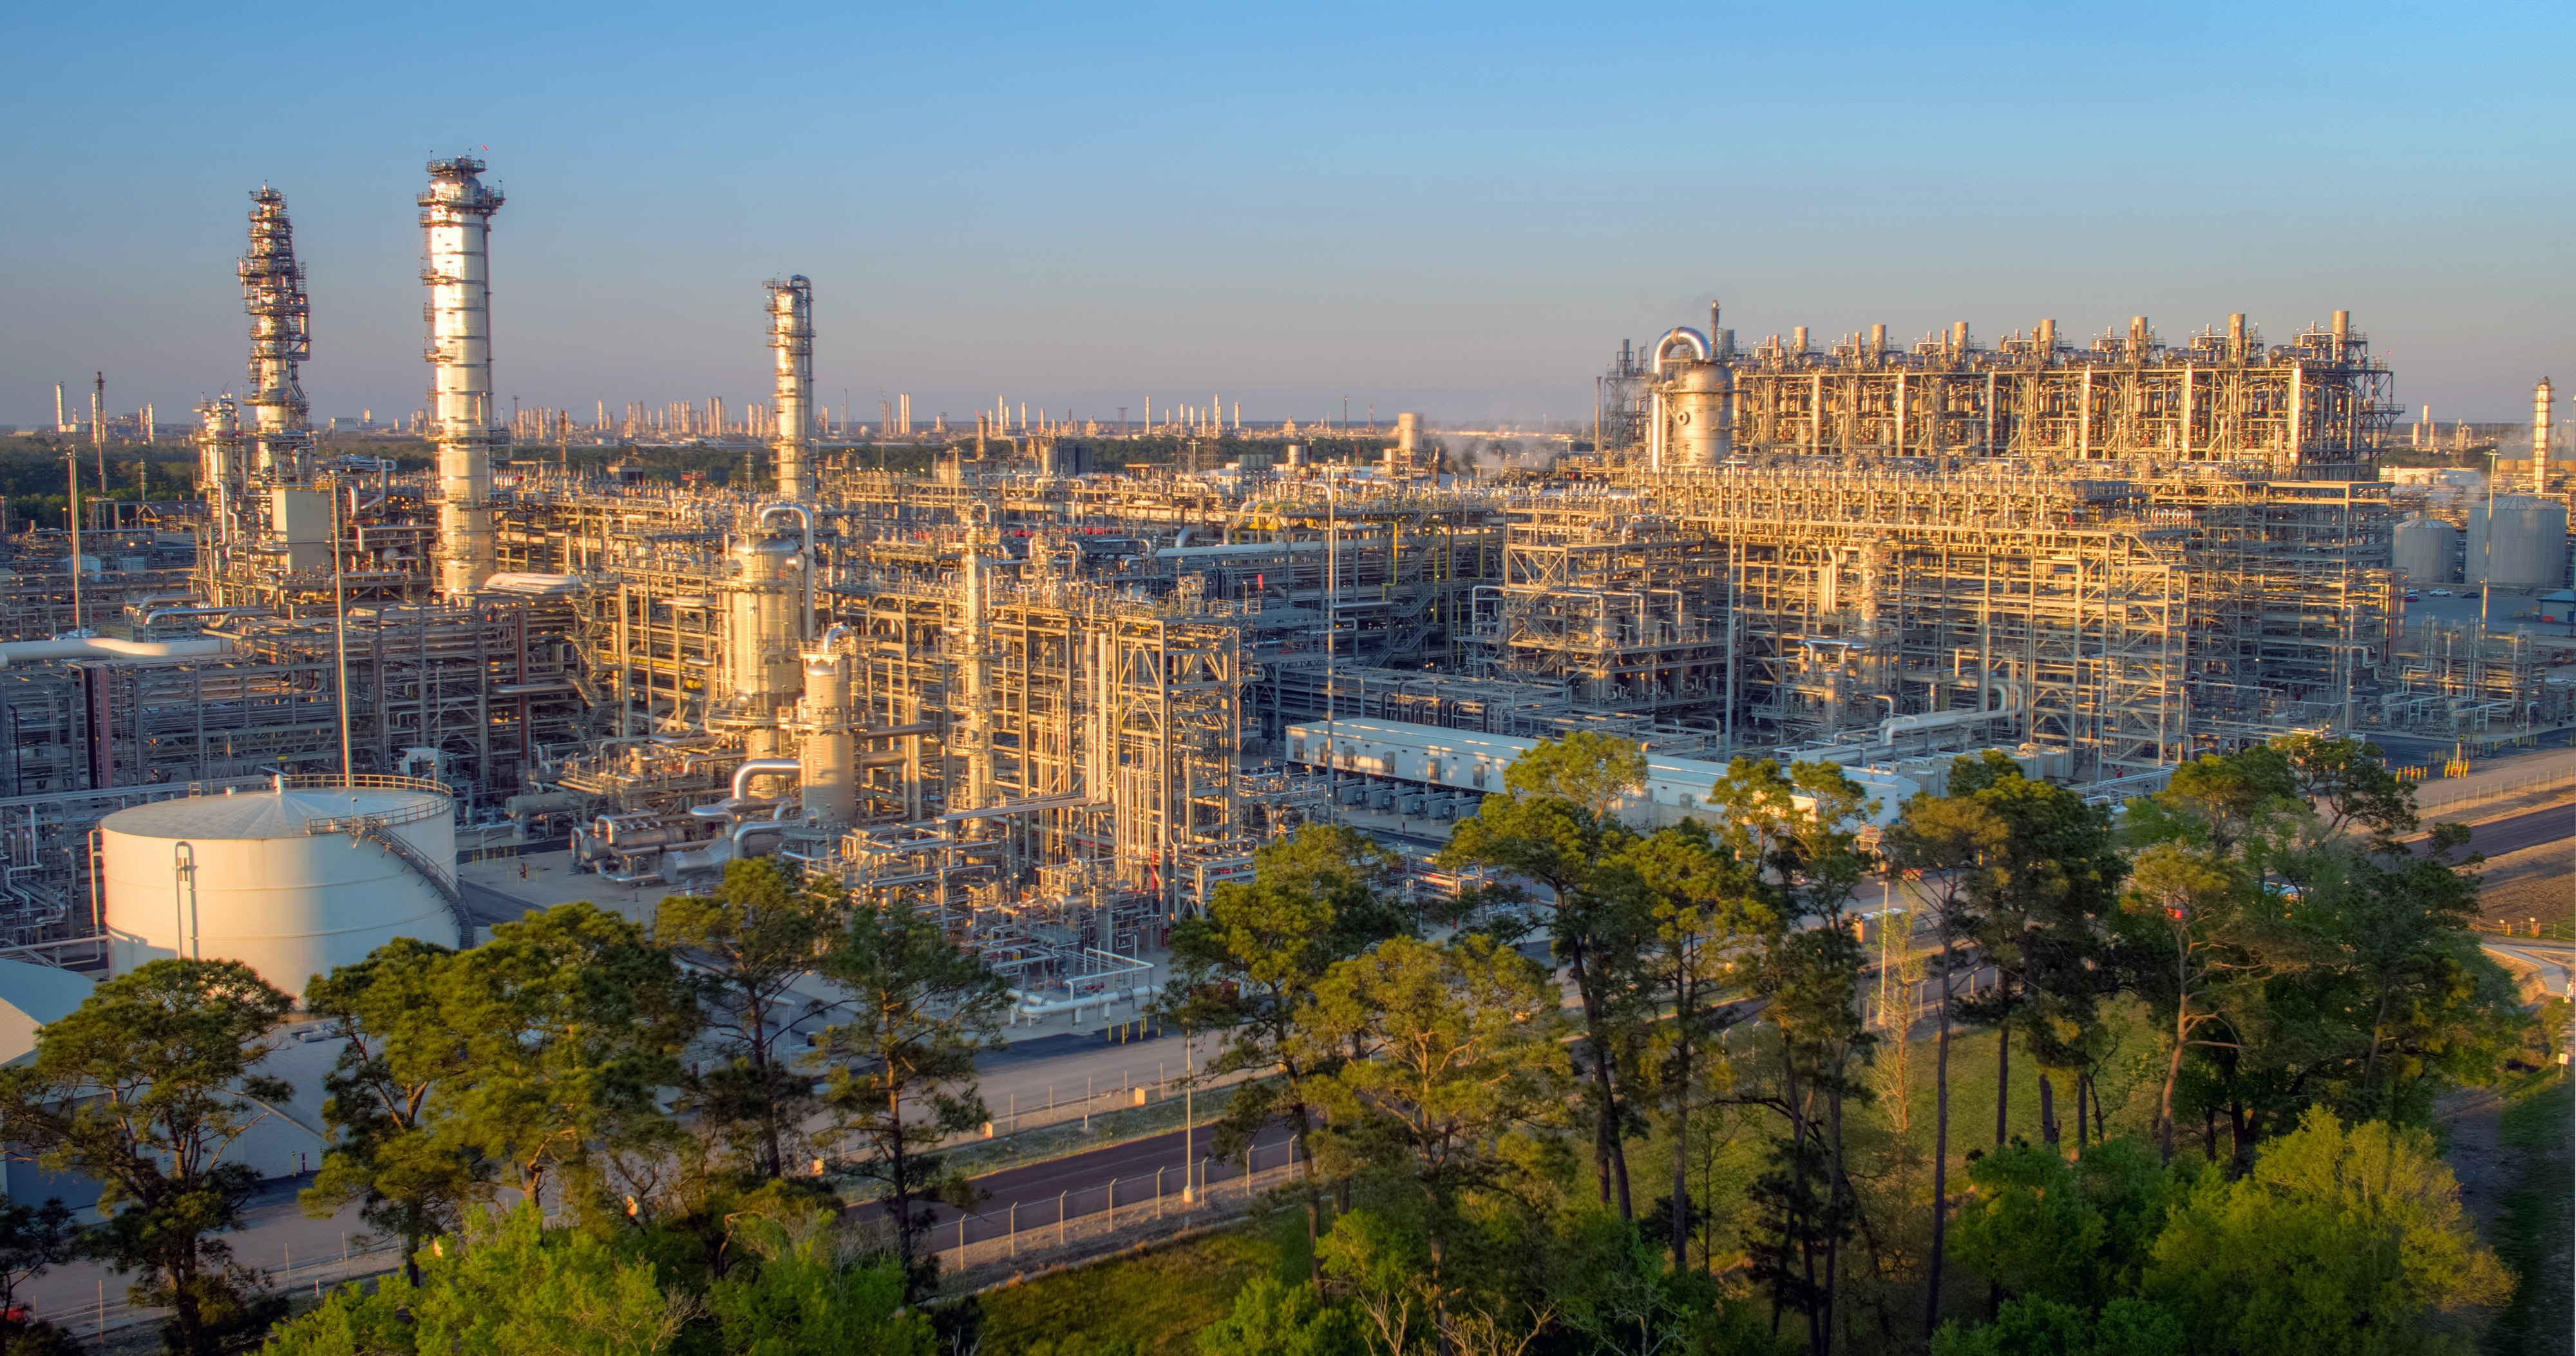 Chevron Phillips Chemical&#8217;s Cedar Bayou plant in Baytown, Texas. Image credit: Chevron Phillips Chemical Company LP